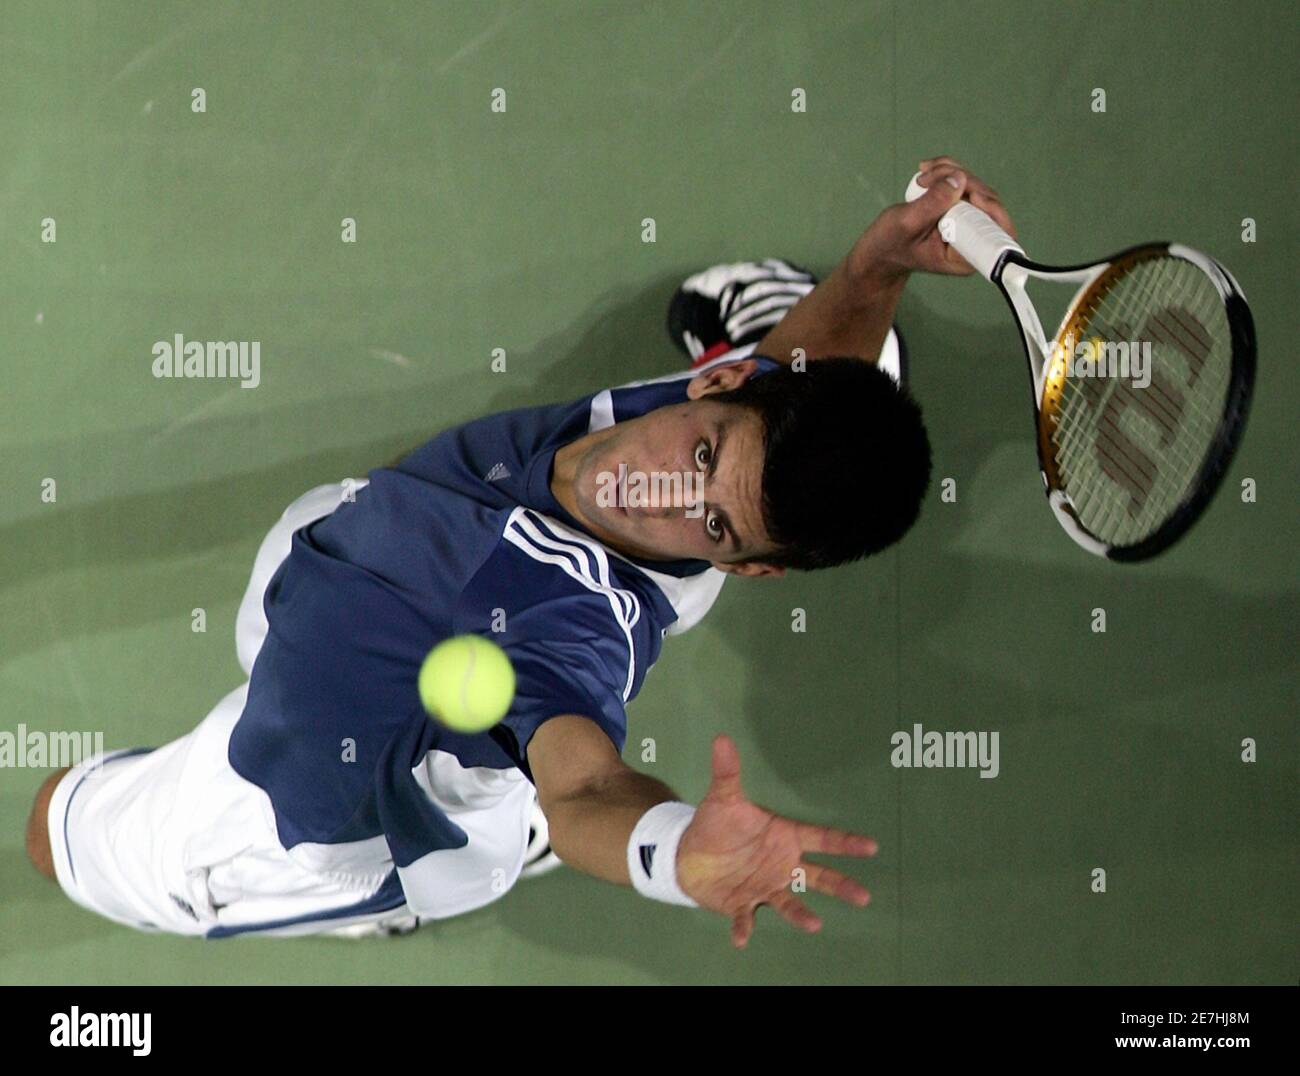 Serbia's Novak Djokovic serves to Switzerland's Roger Federer during their  Davis Cup world group playoff match at the Palexpo in Geneva September 24,  2006. REUTERS/Siggi Bucher (SWITZERLAND Stock Photo - Alamy